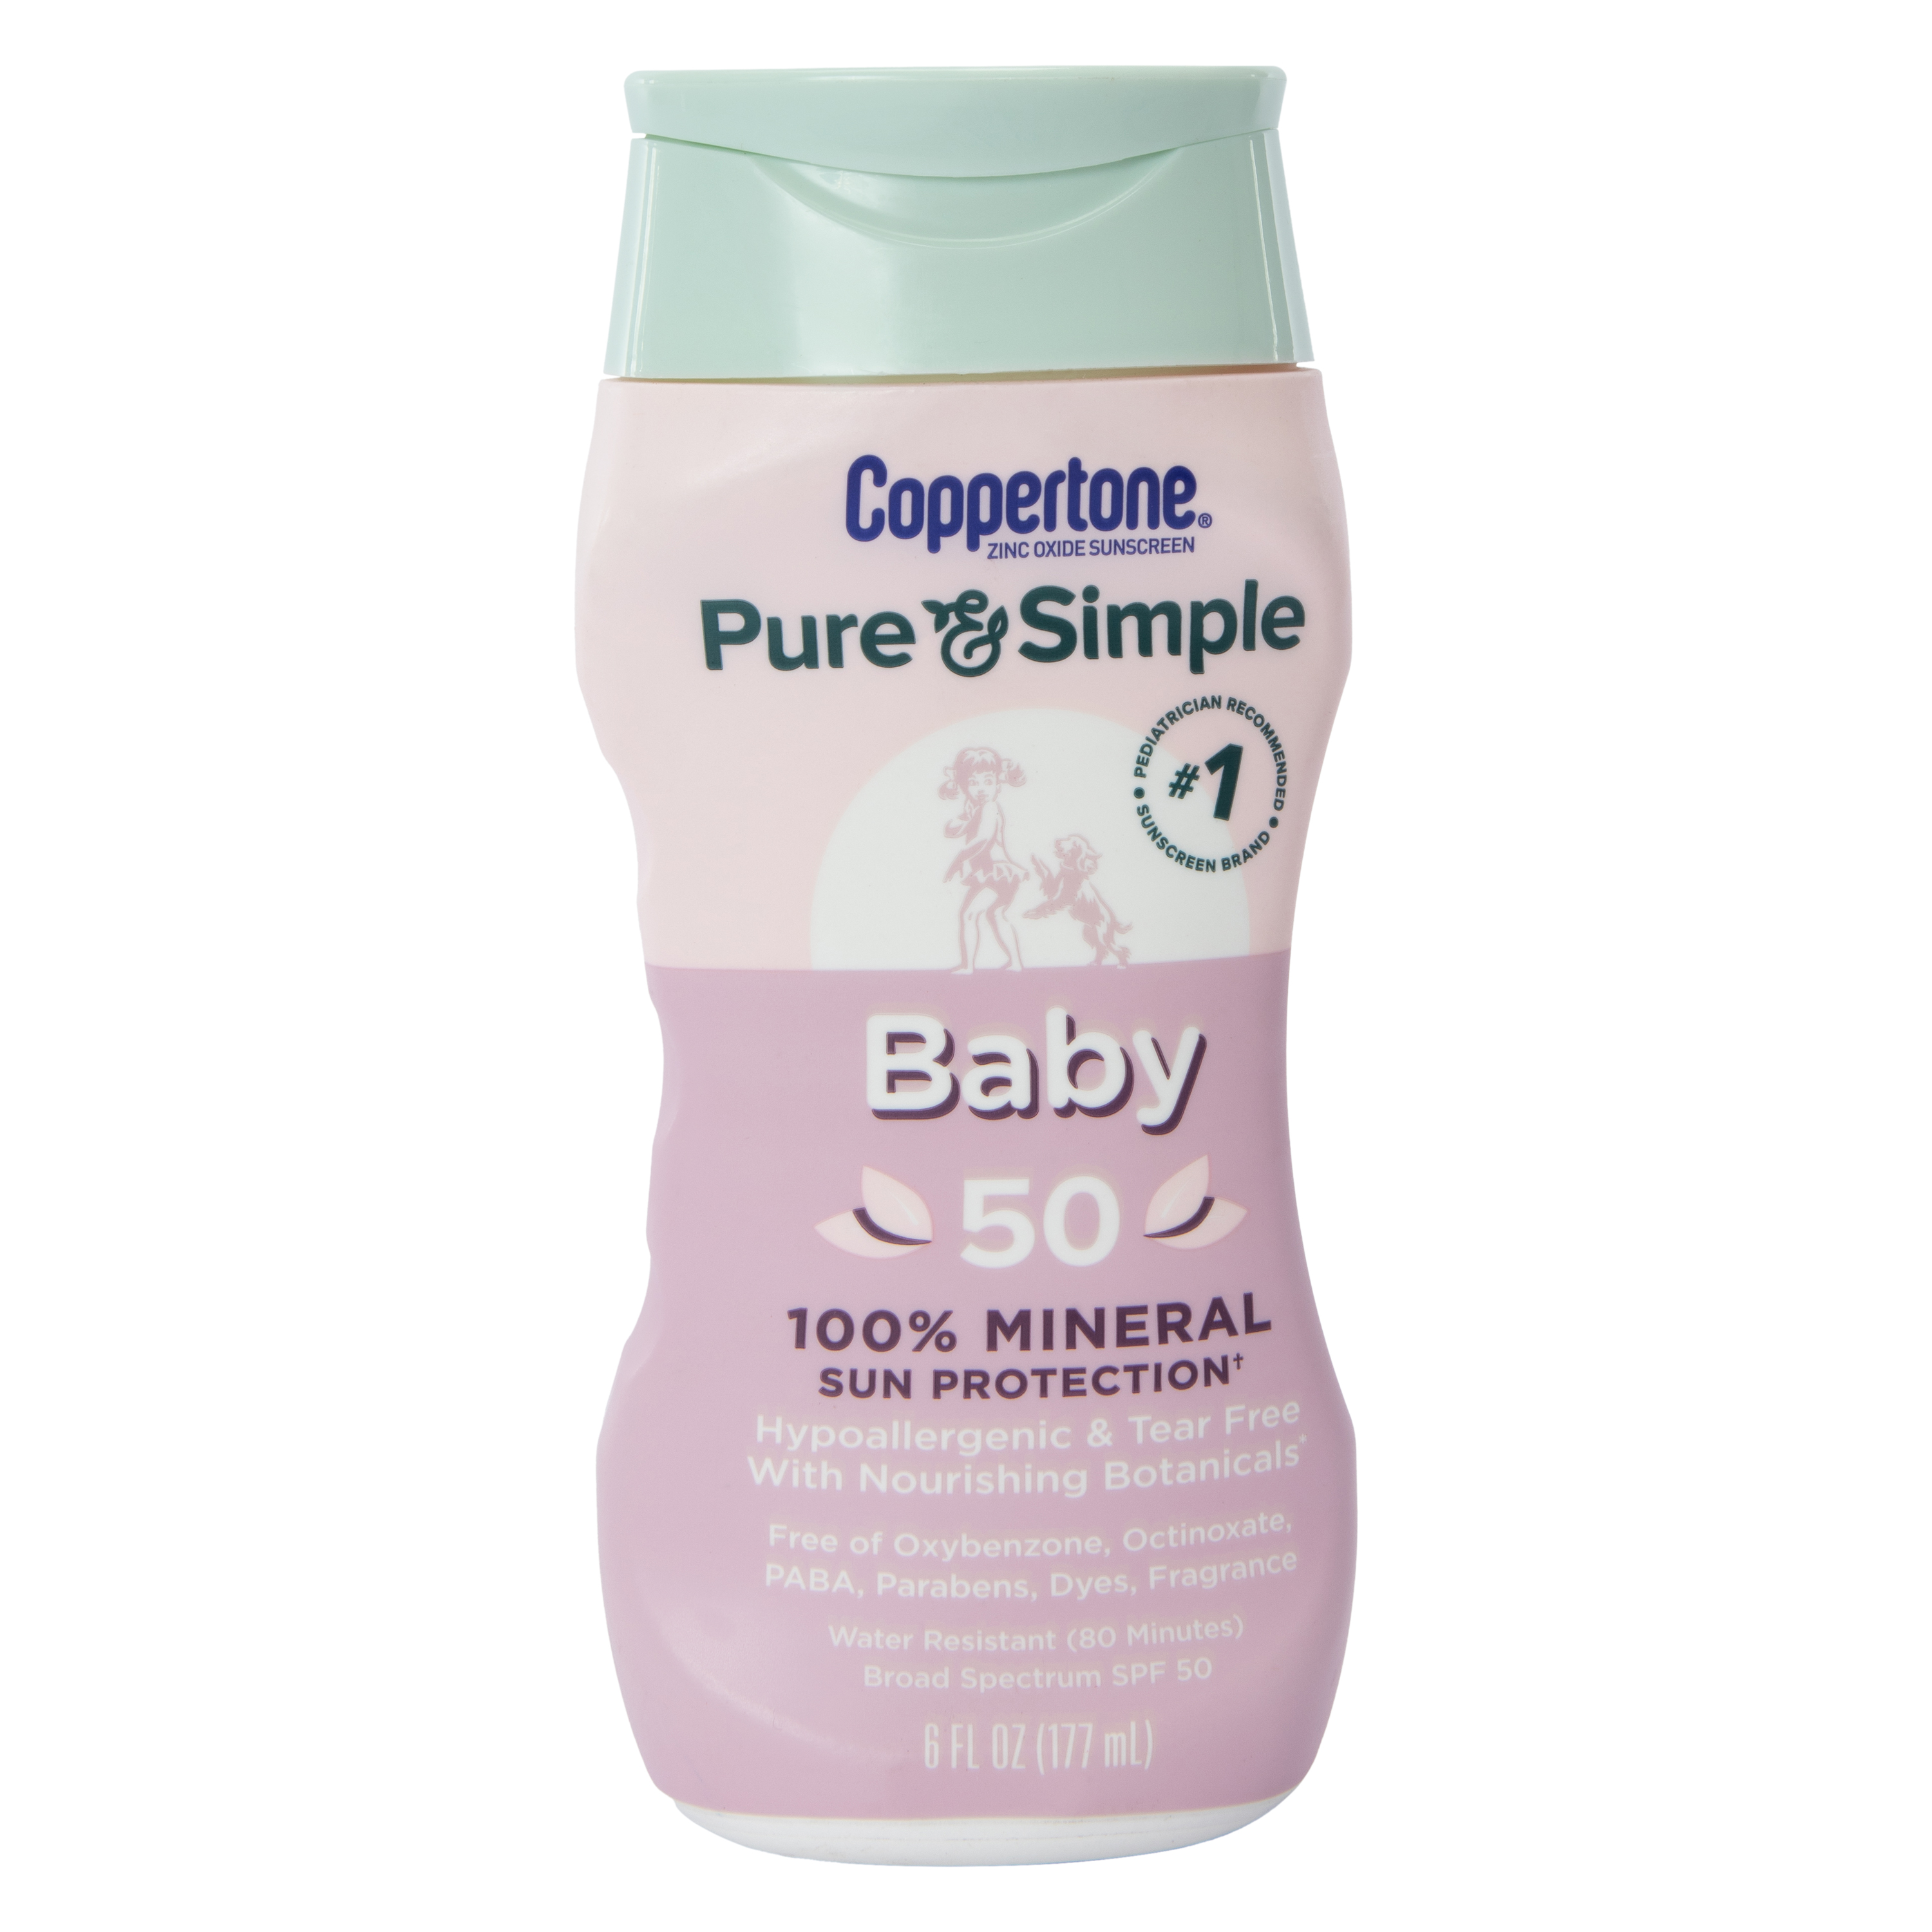 Coppertone® Pure & Simple Baby SPF 50 Sunscreen 6oz